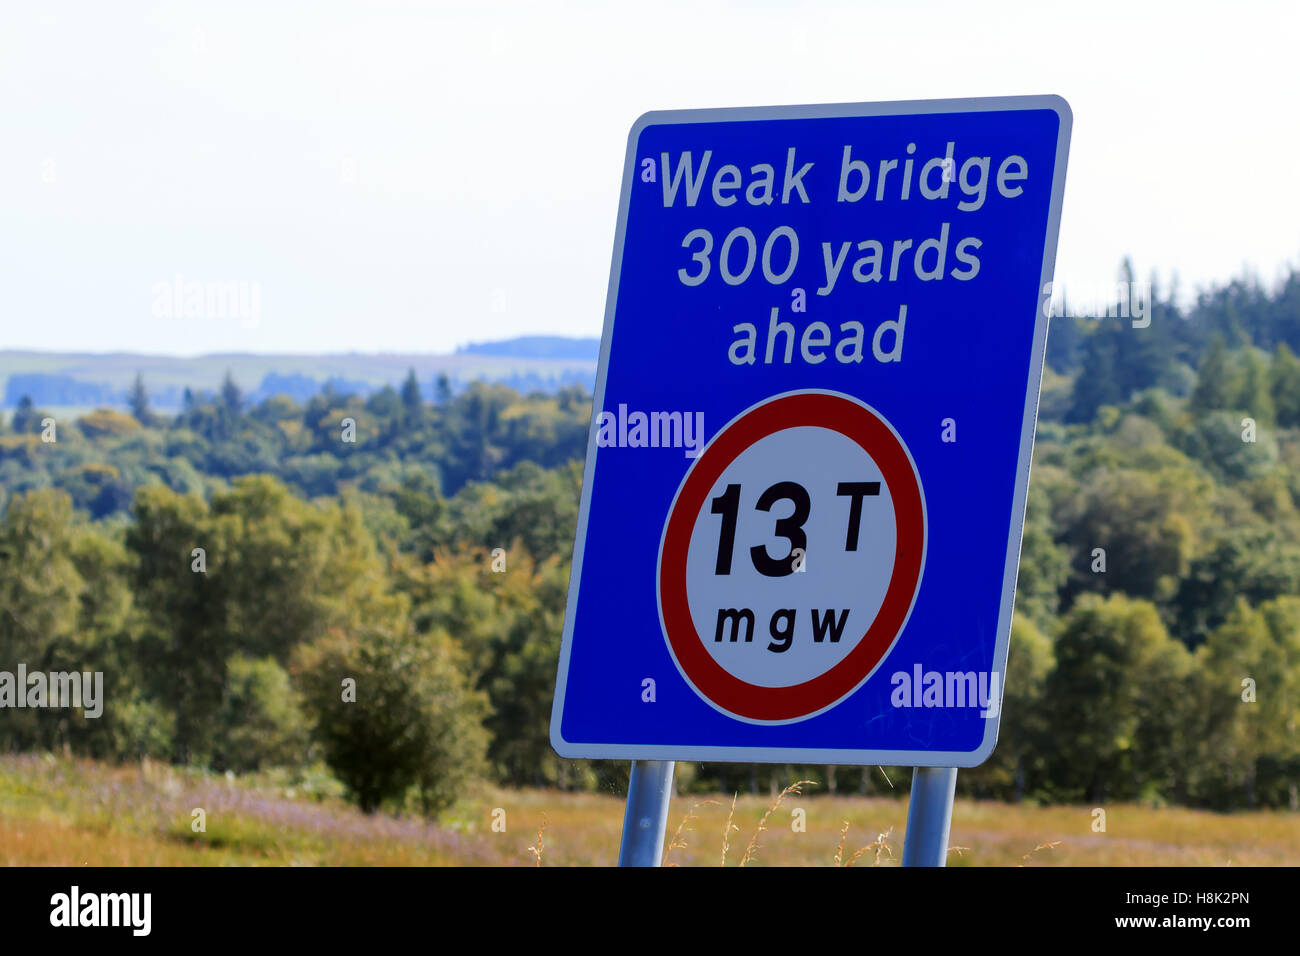 Weak bridge warning sign Stock Photo